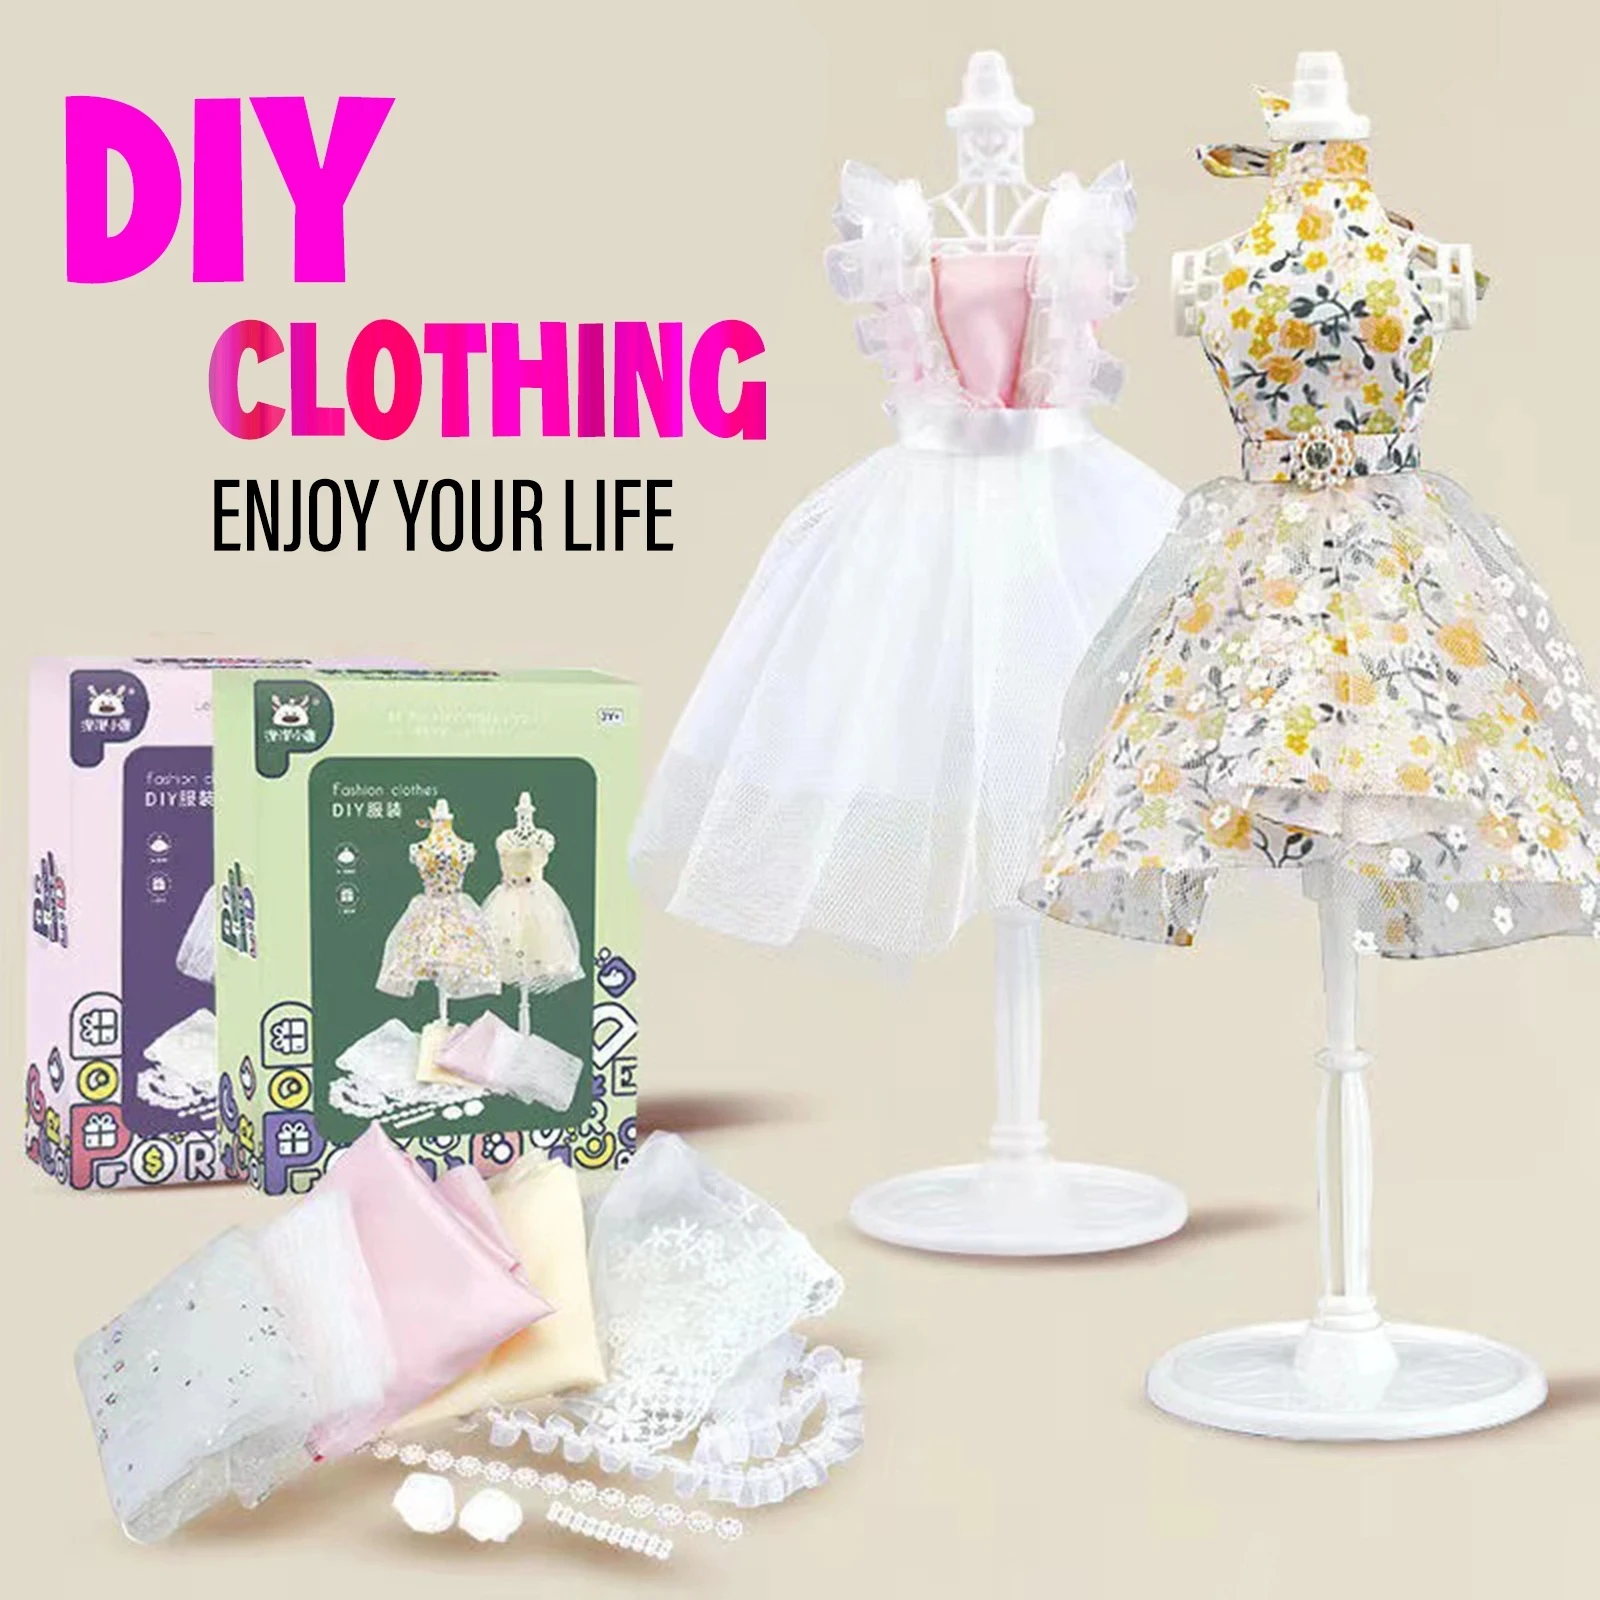 Fashion Design Kit For Girls - Creativity Diy Arts & Crafts Kit Sewing Kit  For Kids Learning Toys